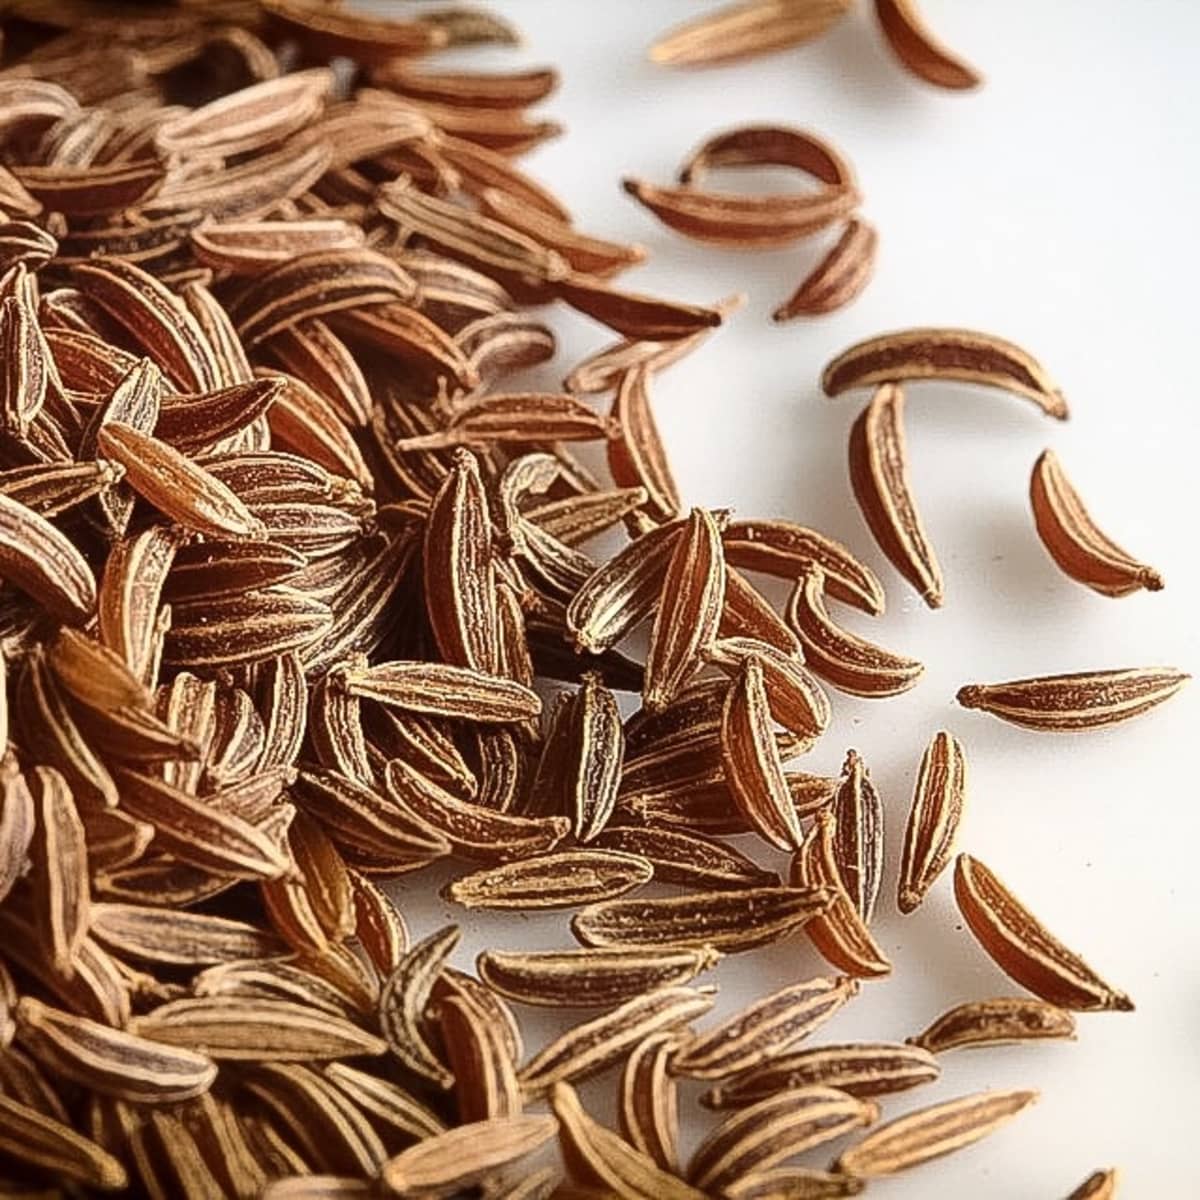 Nigella seeds - Black Cumin - David Vanilla : Exceptional spices